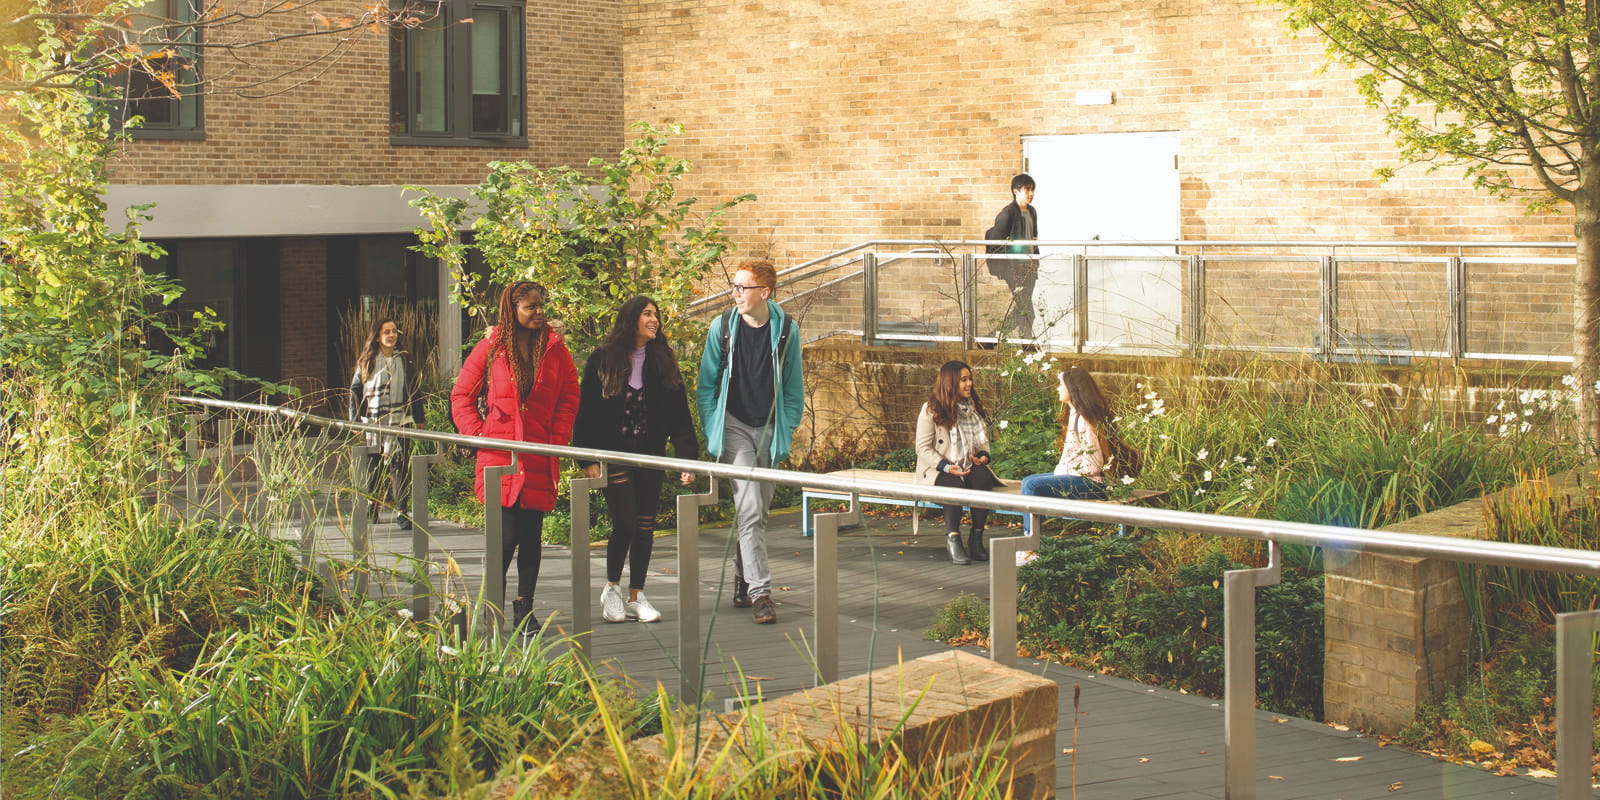 Students at Lancaster University